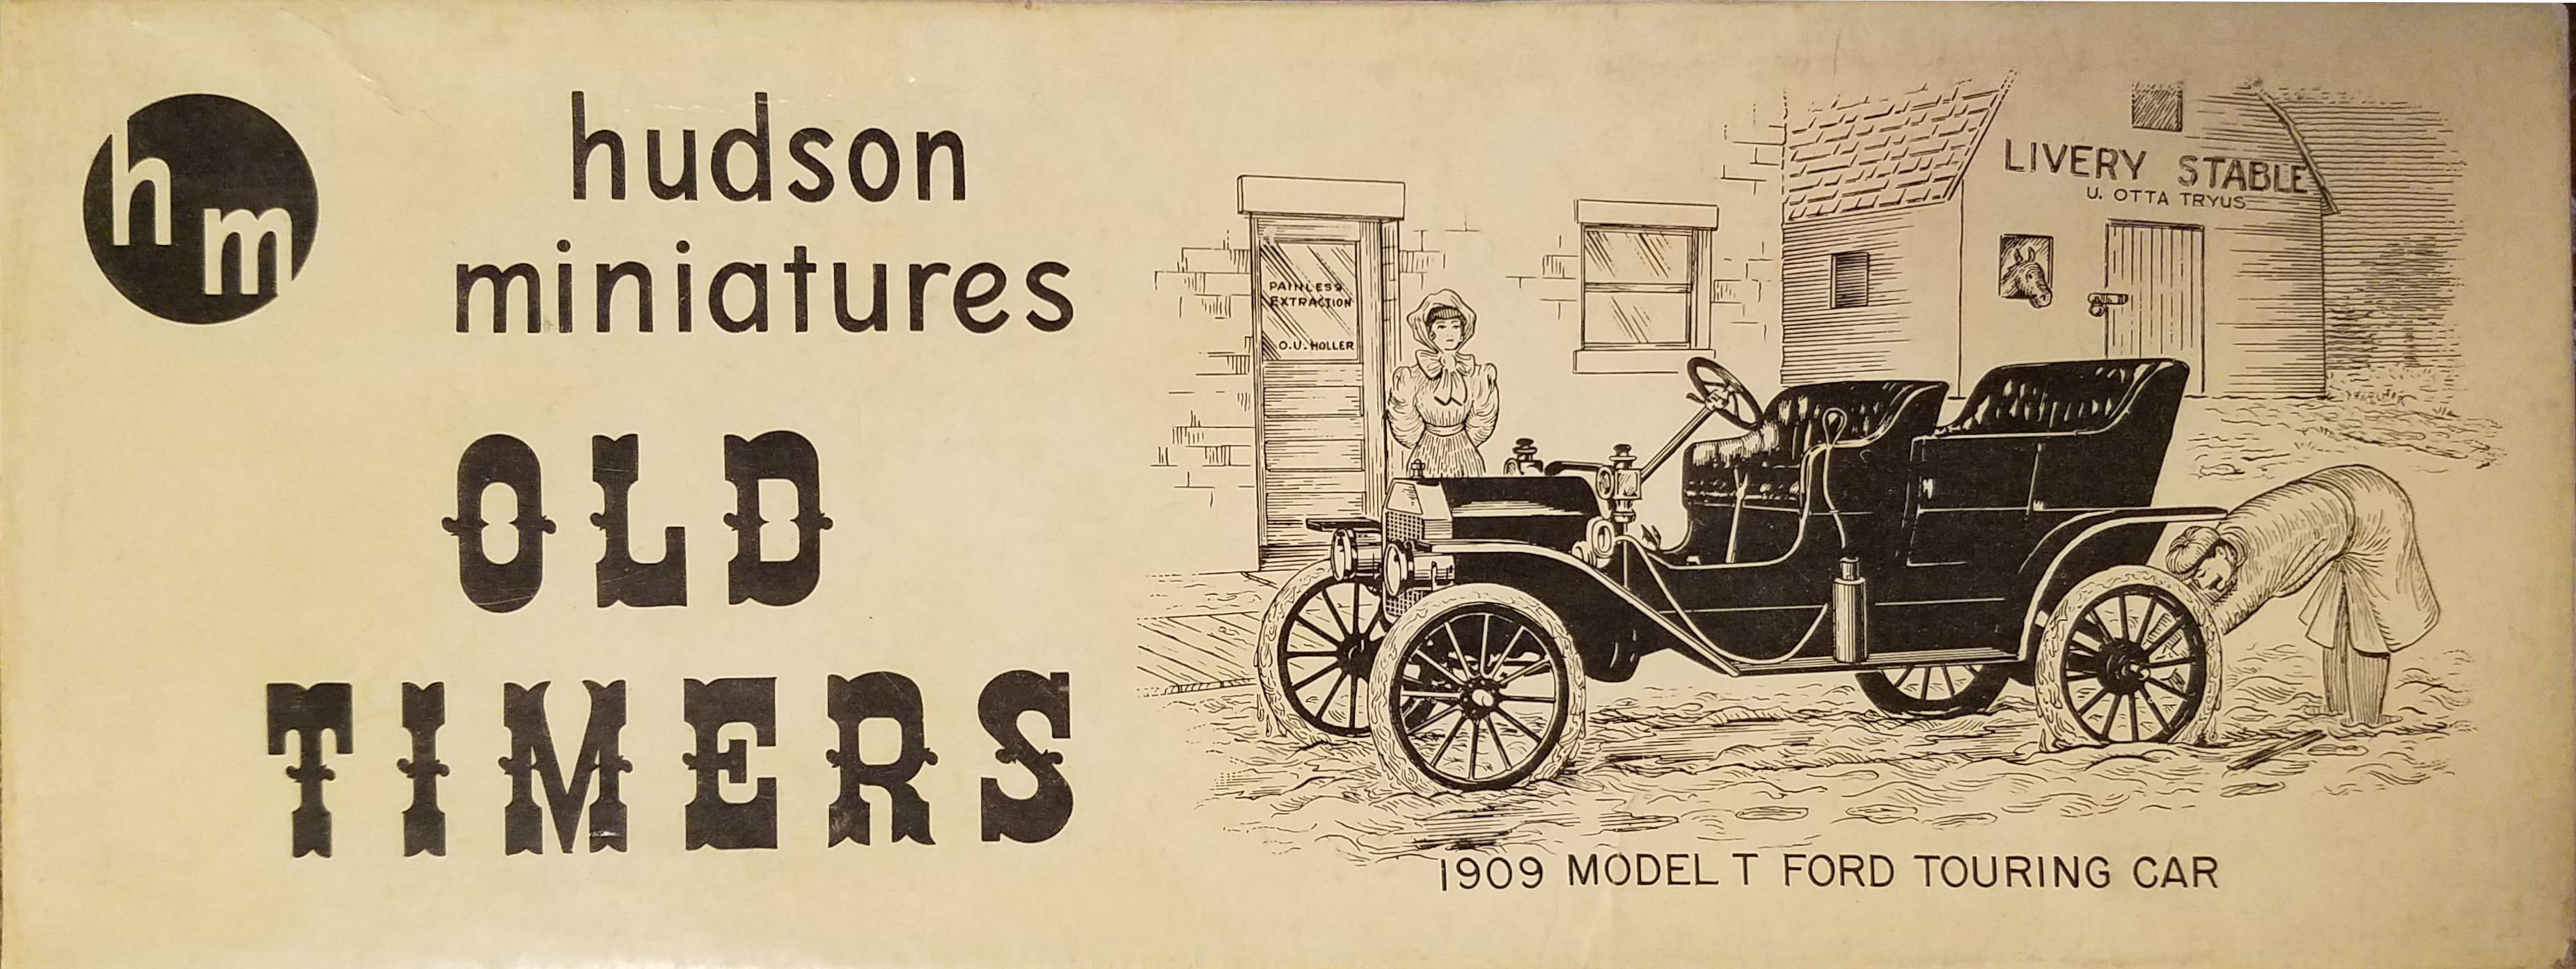 1909 Model 'T' Touring Car Wood (Hudson Miniatures)